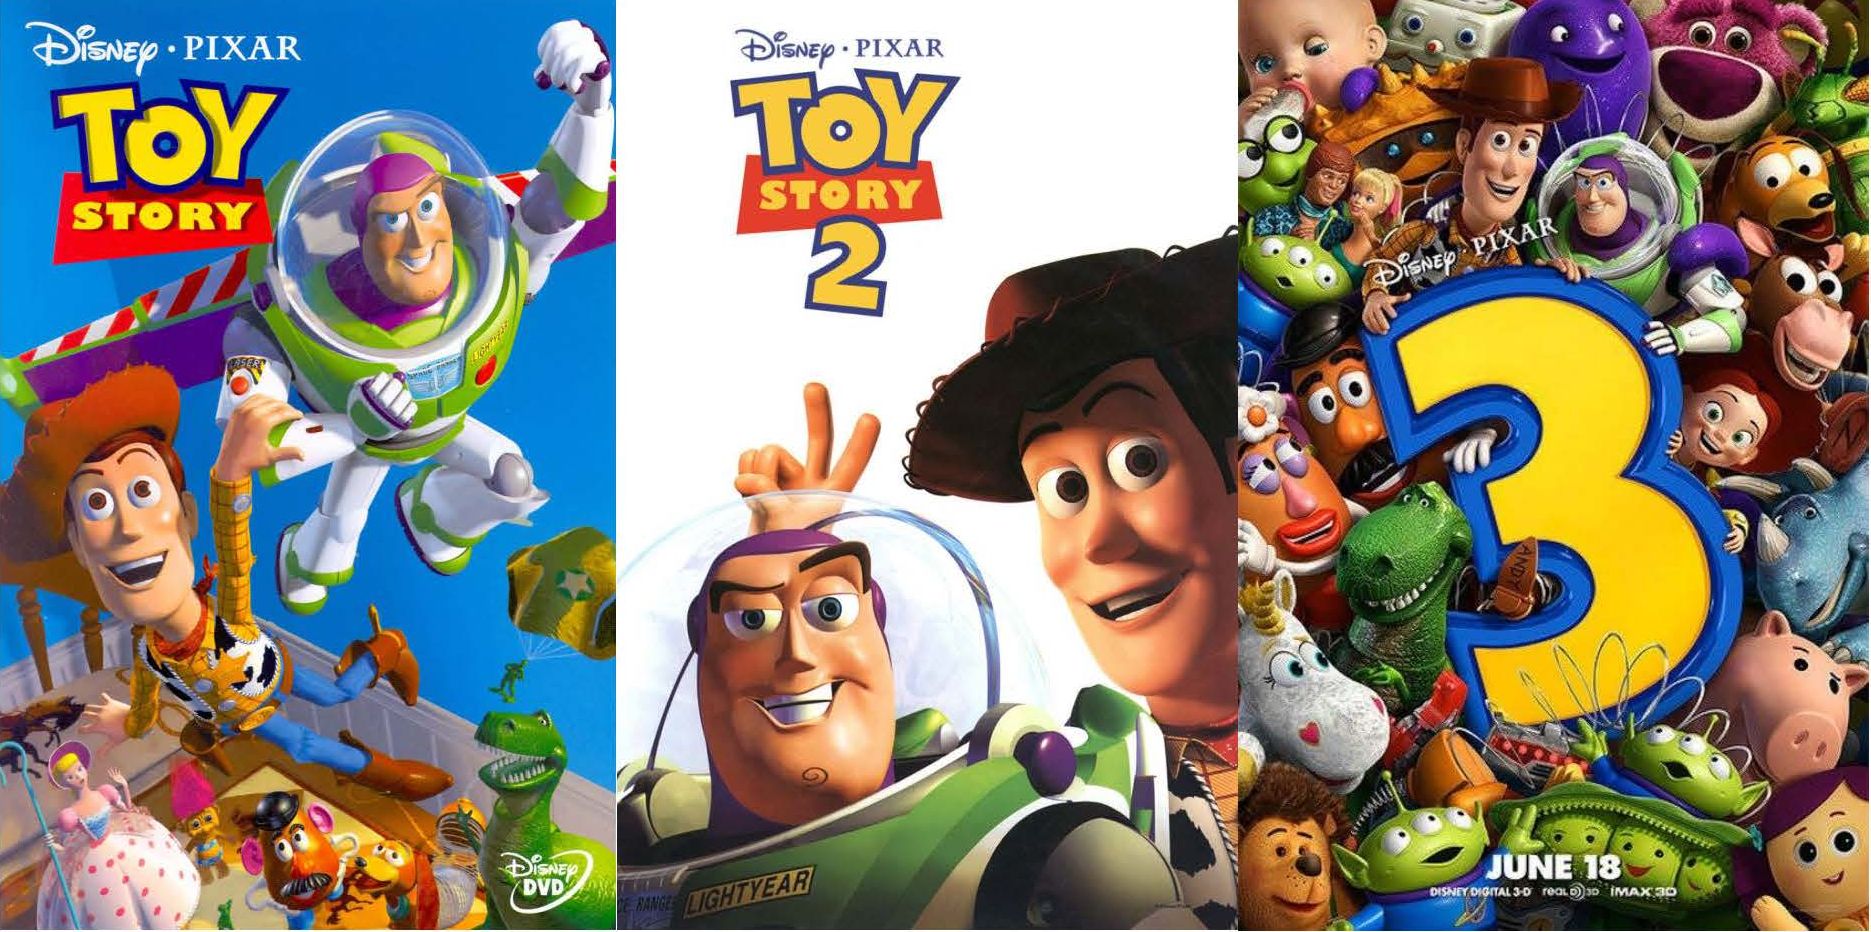 Toy Story 1995 - IMDb